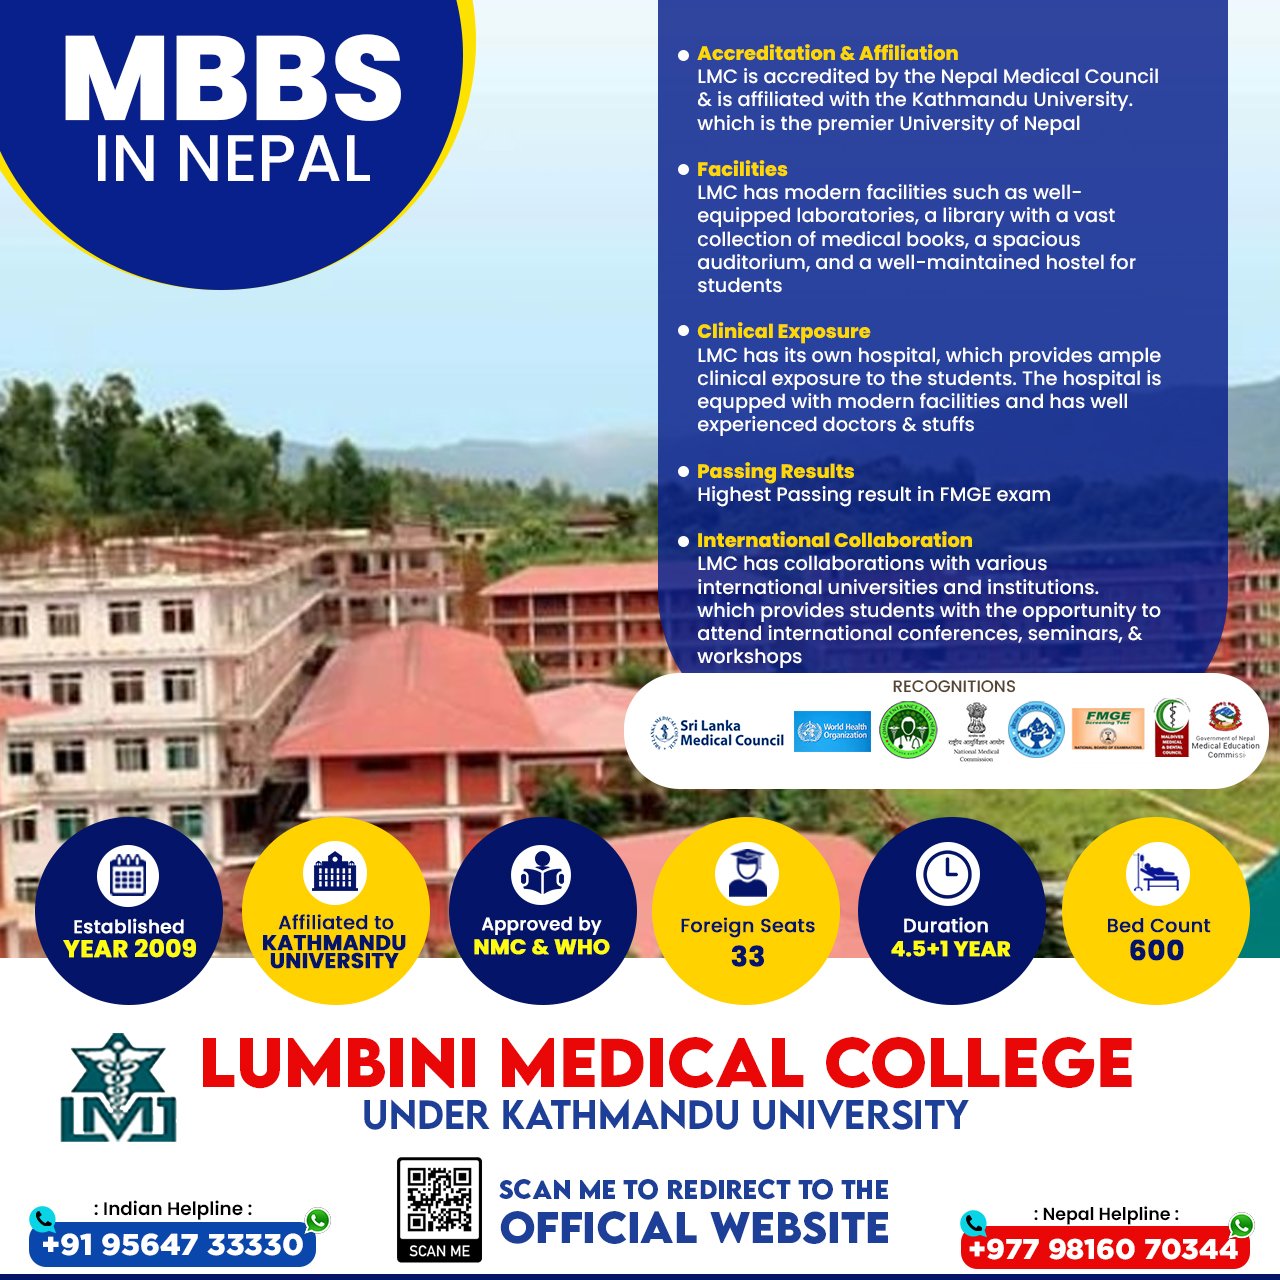 mbbs-in-nepal-at-lumbini-medical-college-under-kathmandu-university